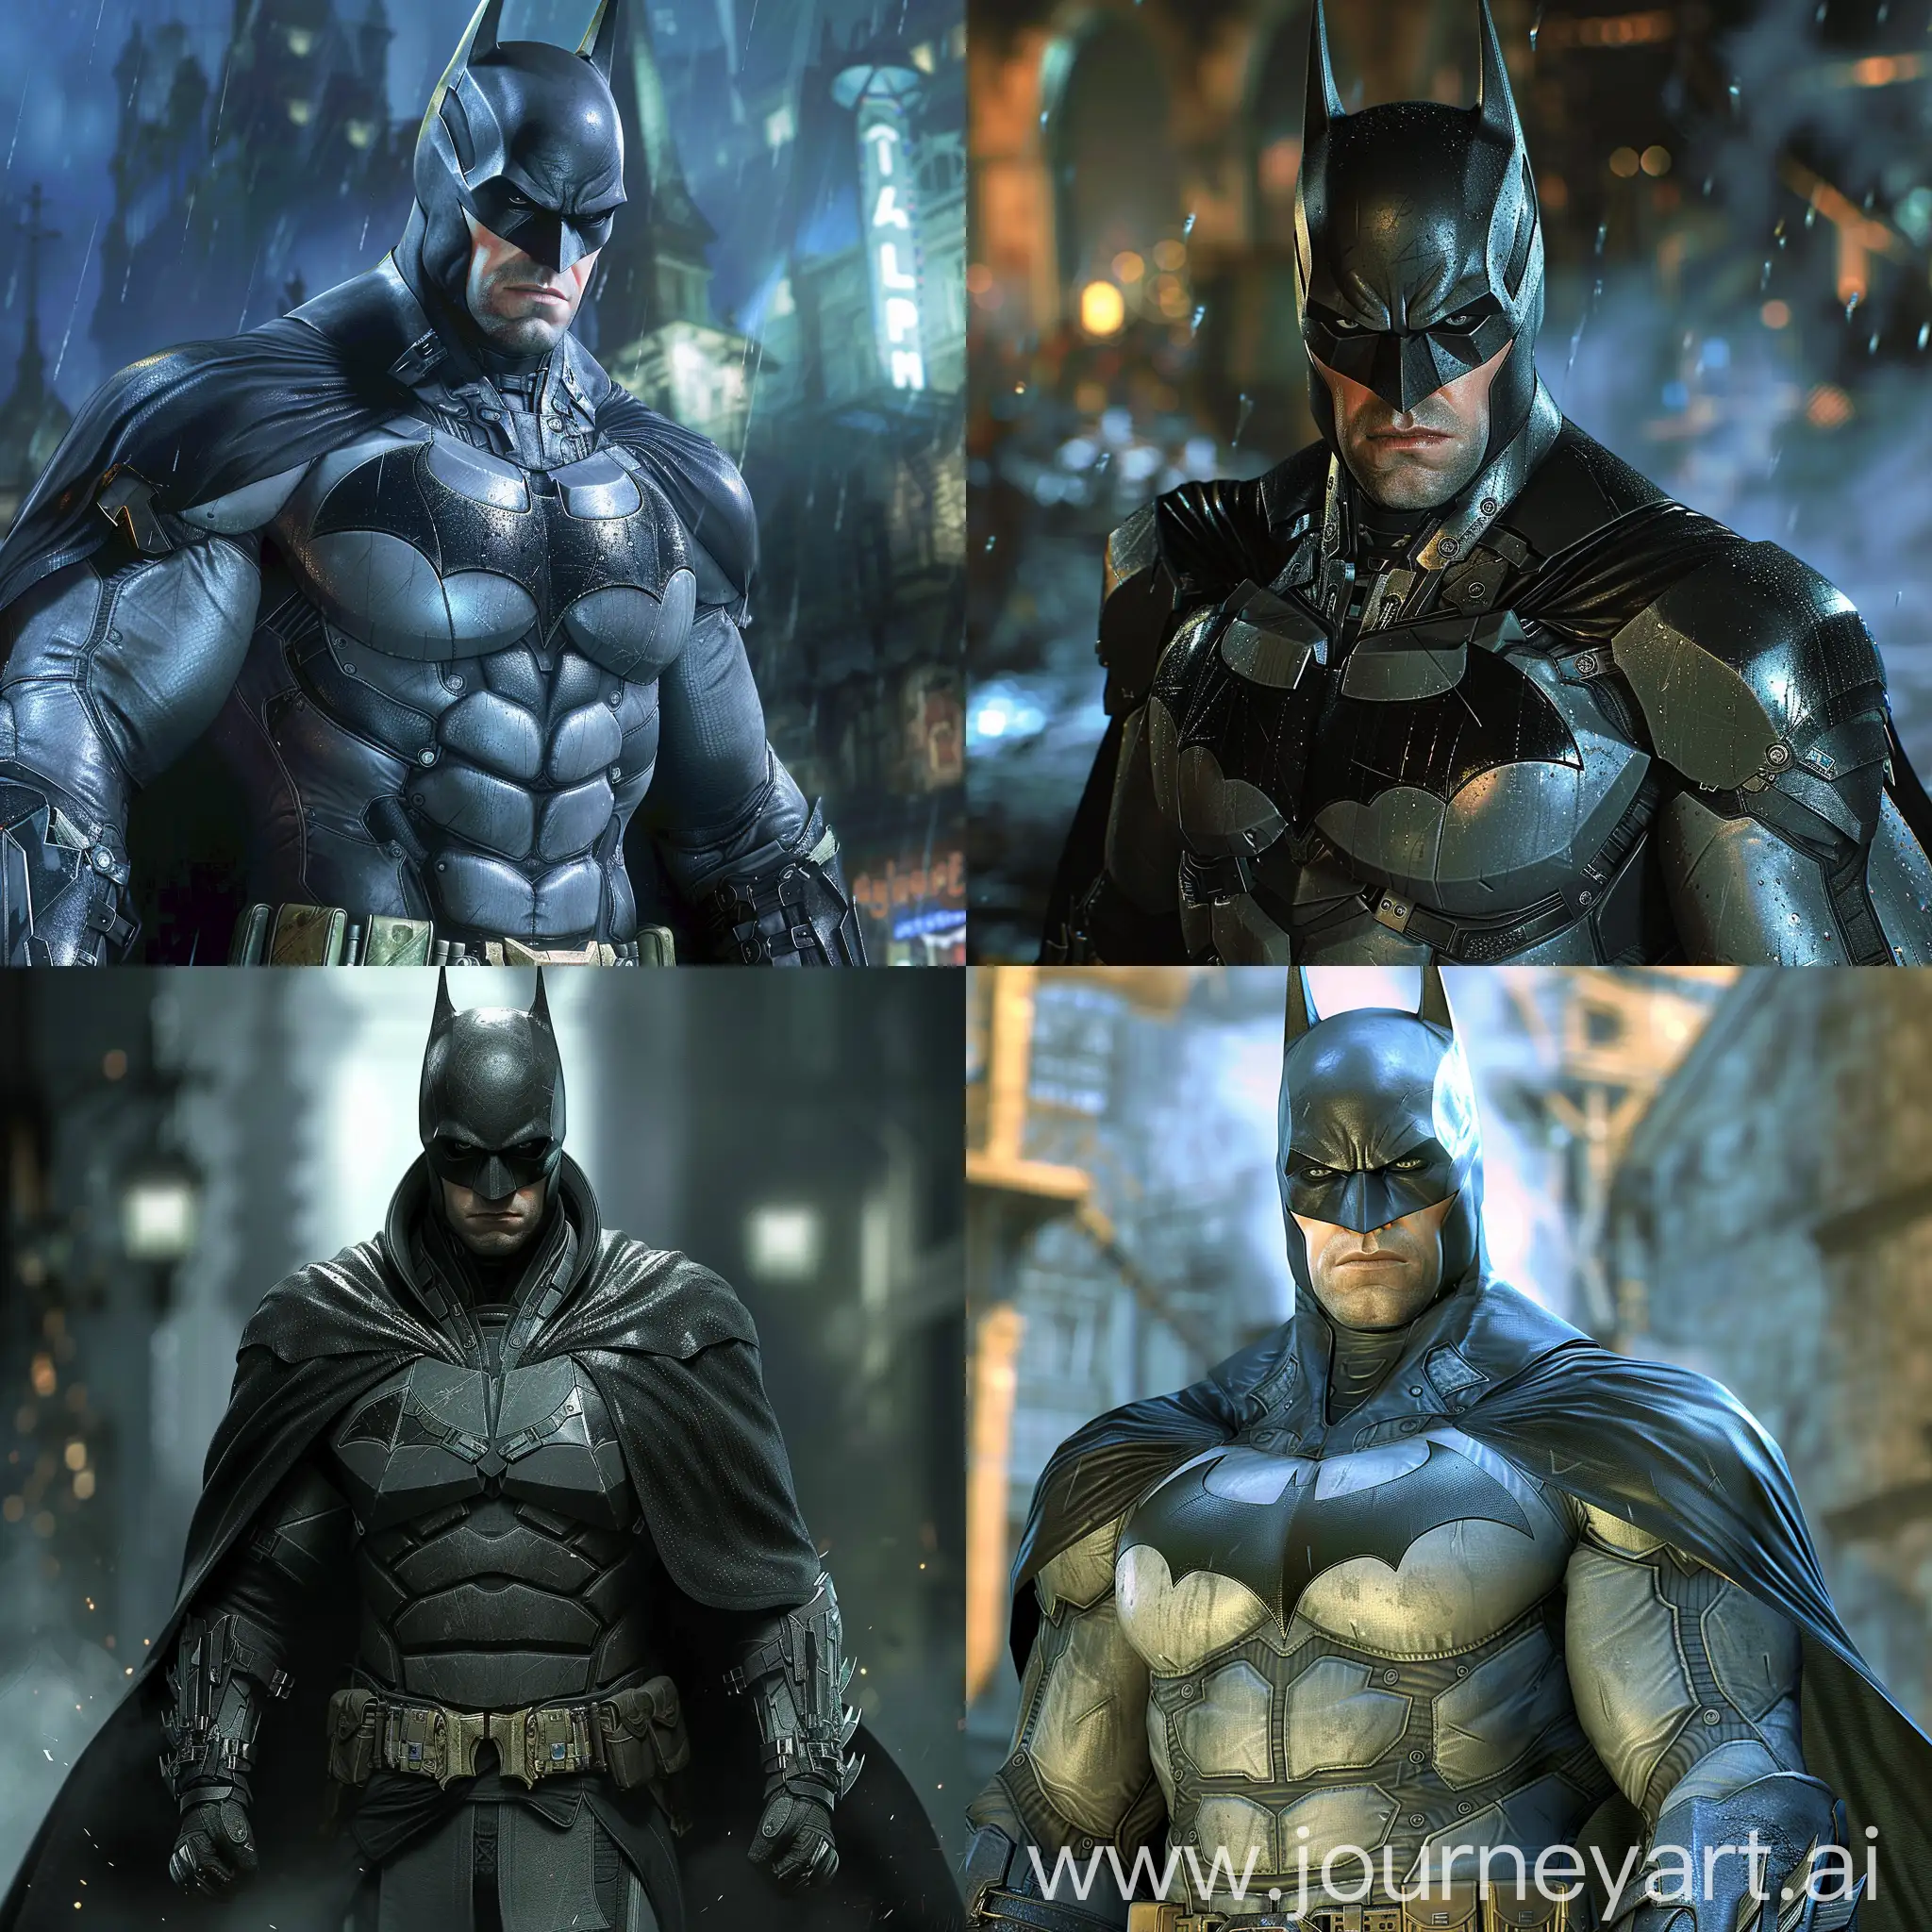 Batman-Assassins-Creed-Video-Game-Character